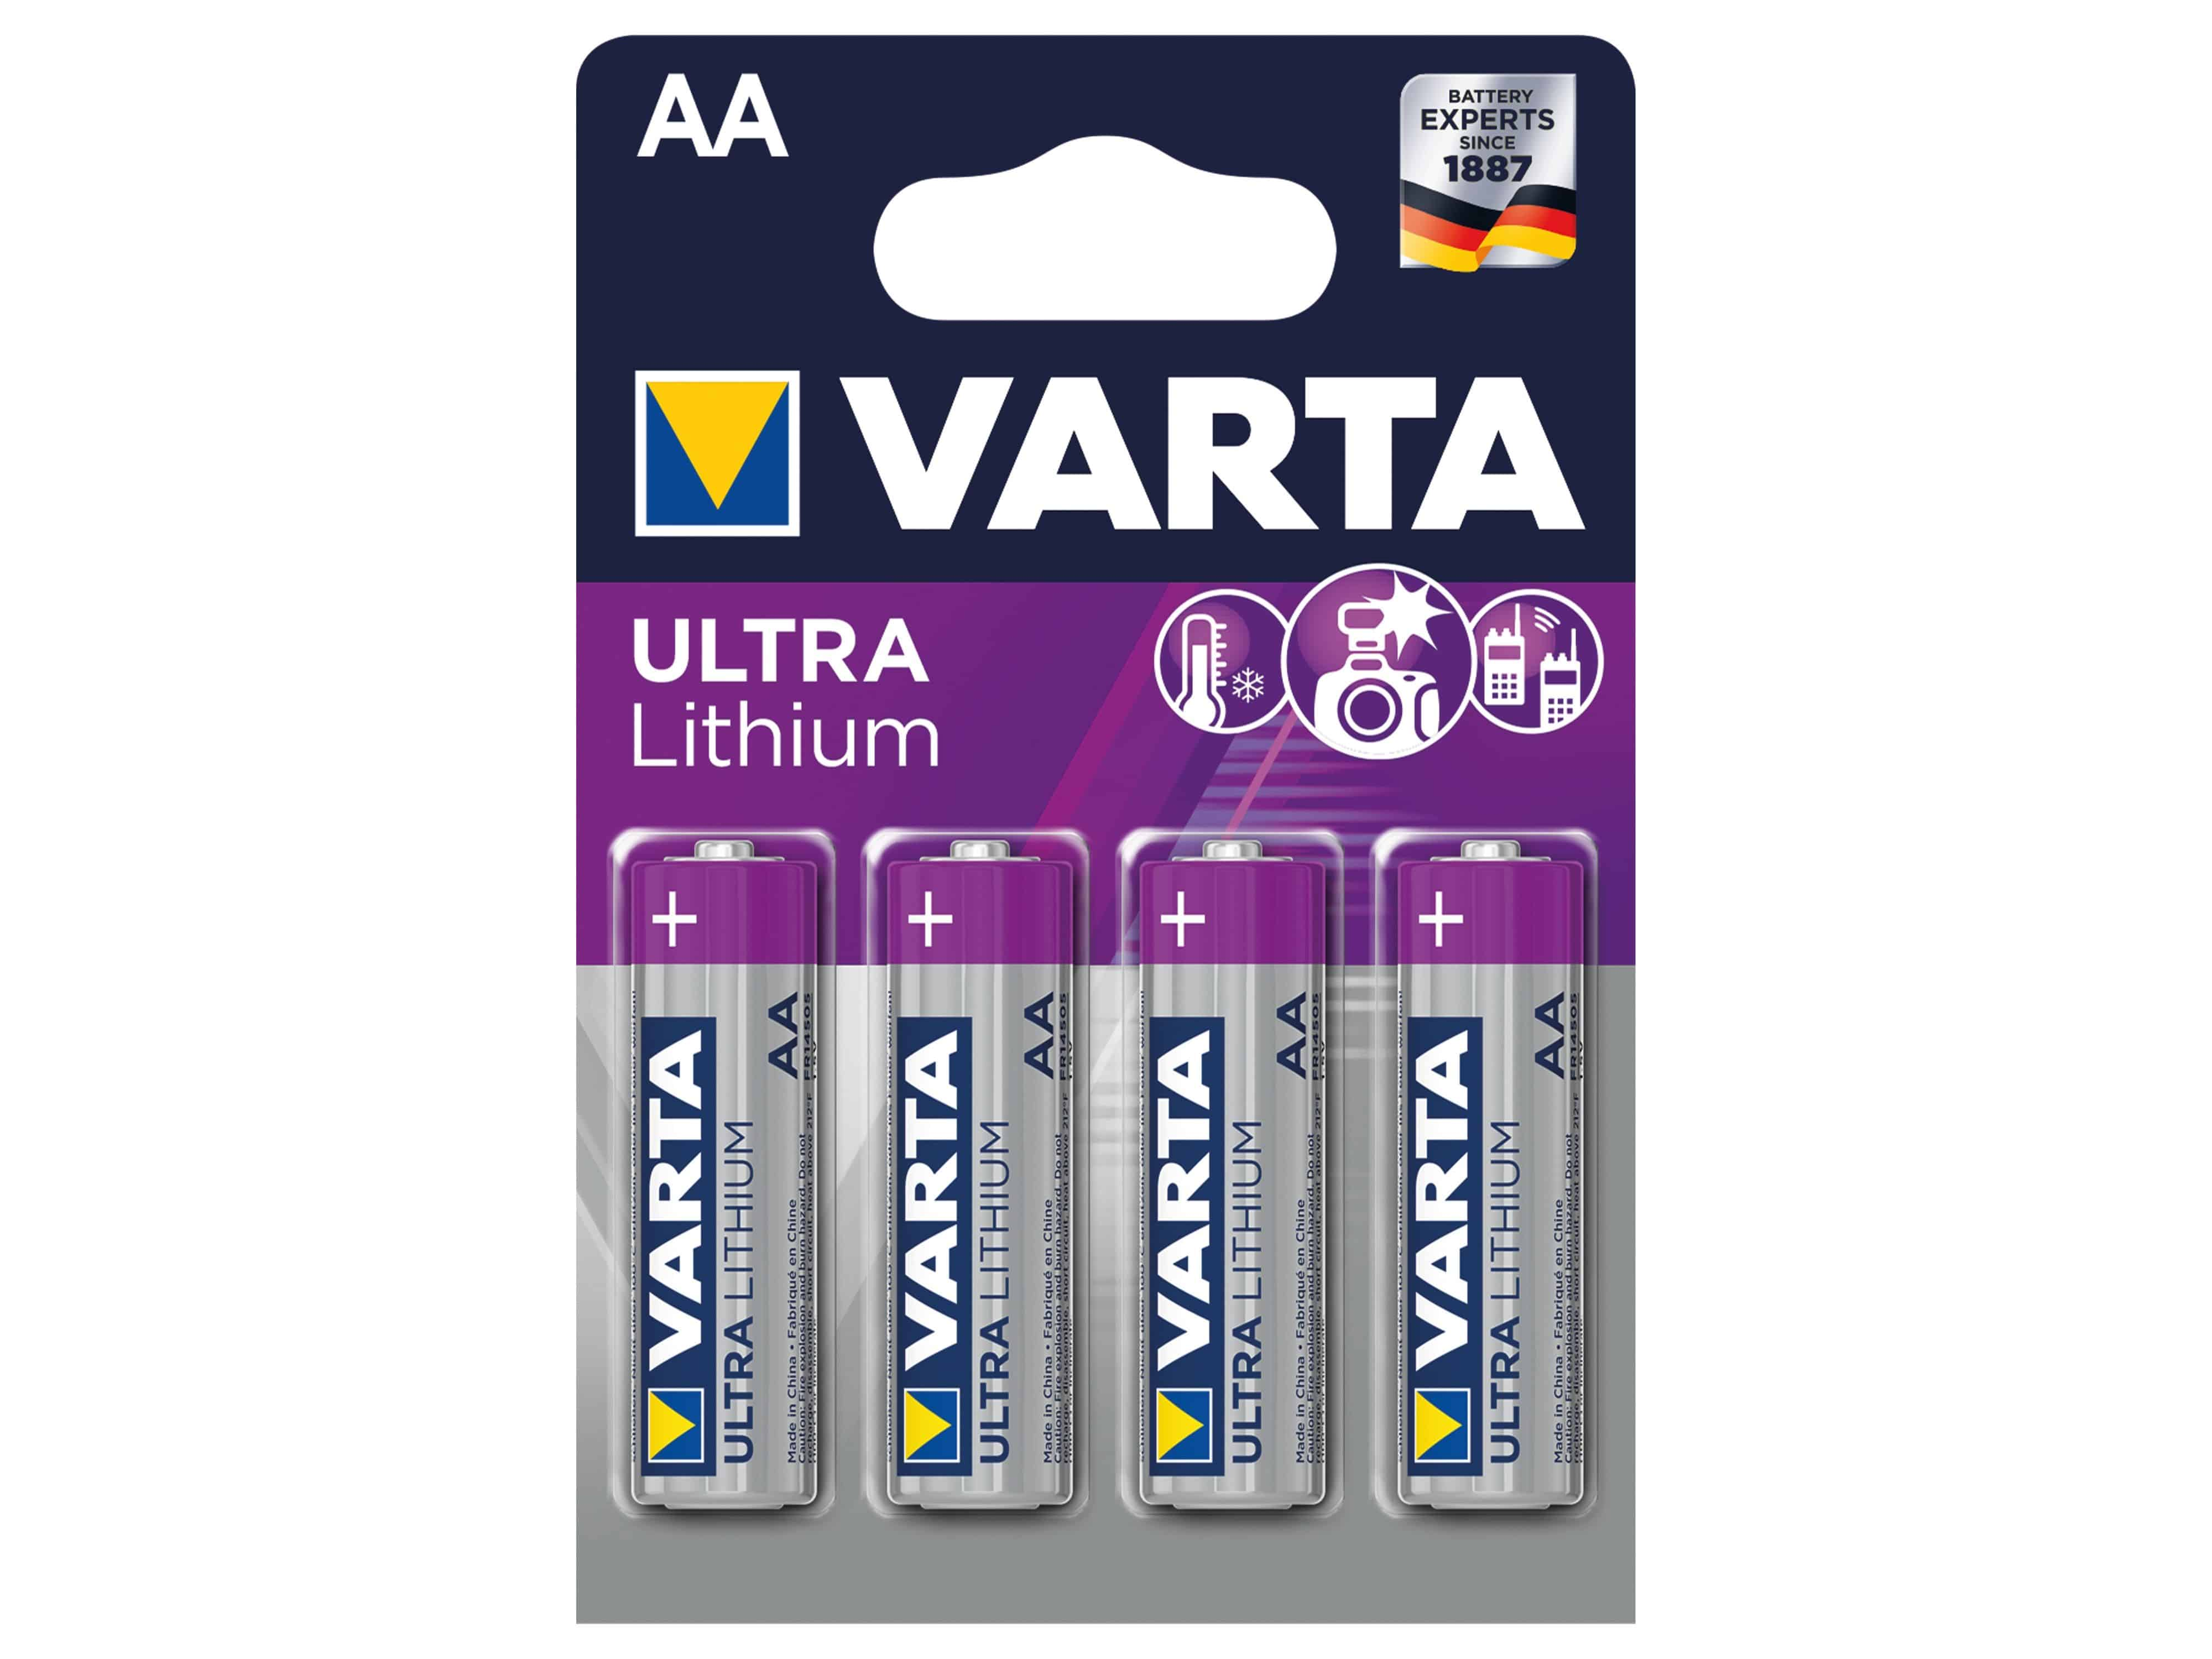 Lithium (4er Volt, Lithium, Ultra 1.5 Ah Batterie, VARTA L91 AA Blister) distancia Mignon Mando Batterie 2.9